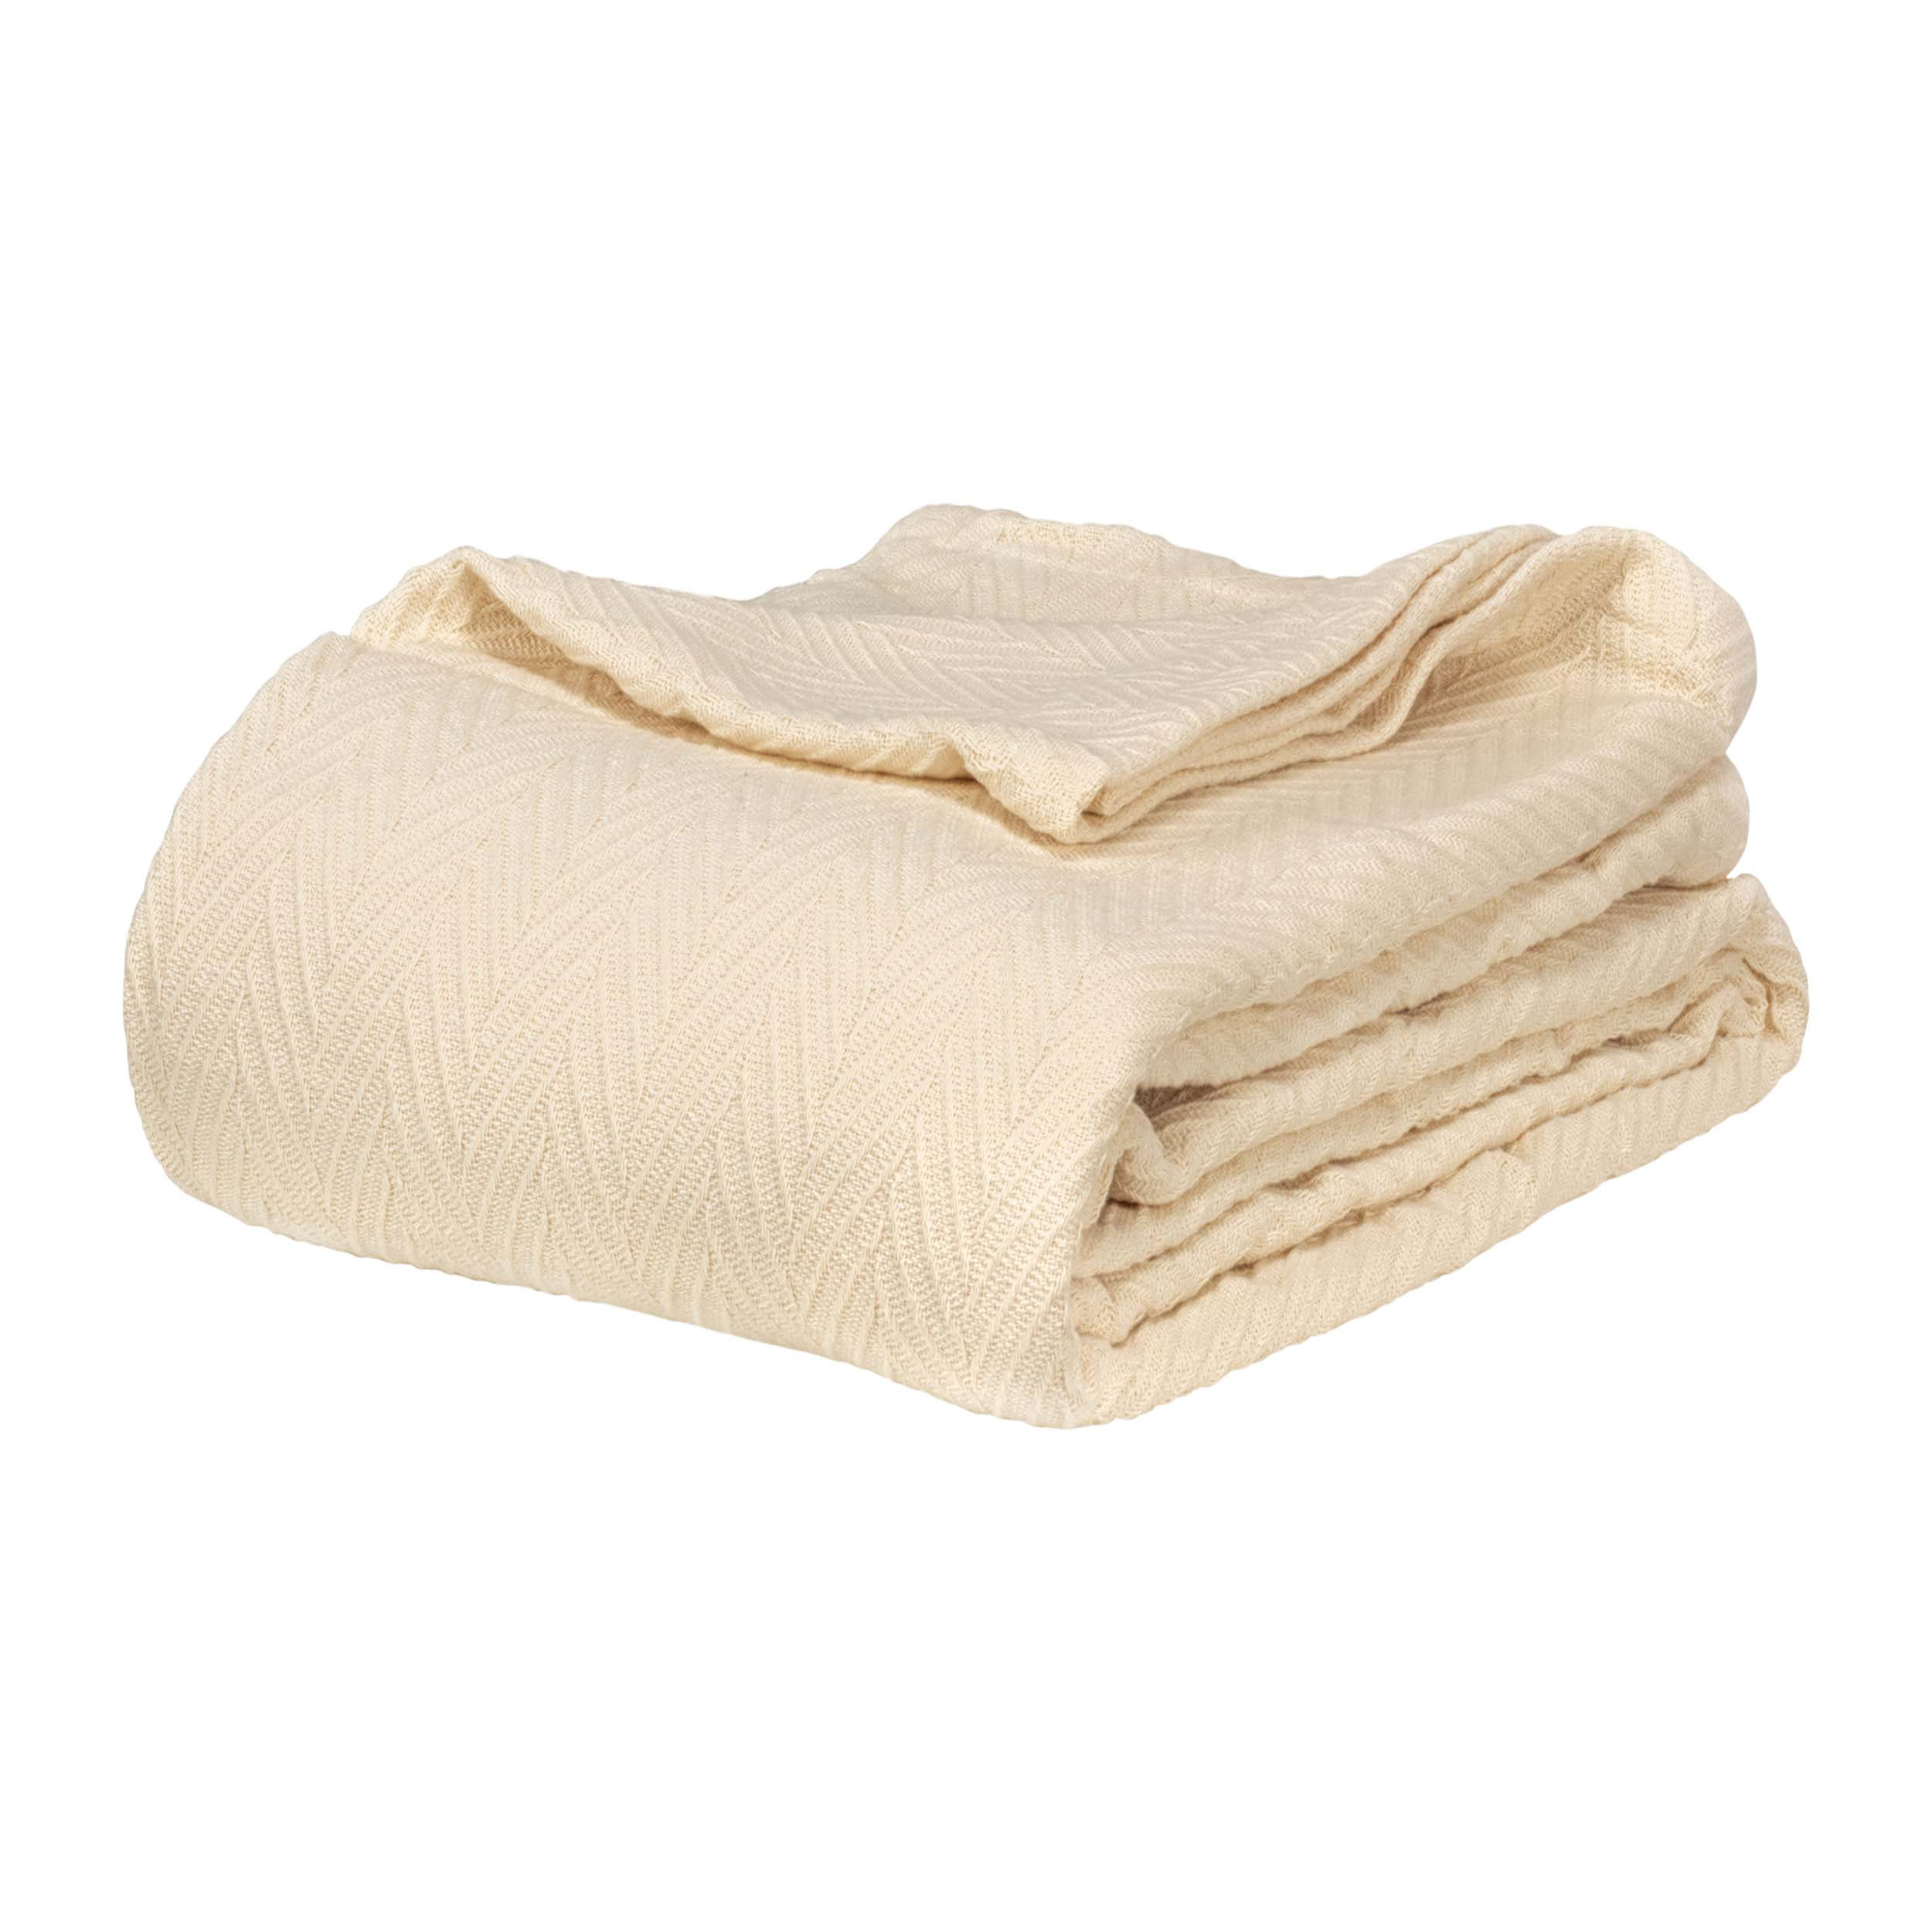 Ebern Designs Ghislain Woven Metro Zig-Zag All-Season Cotton Blanket   Reviews Wayfair Canada